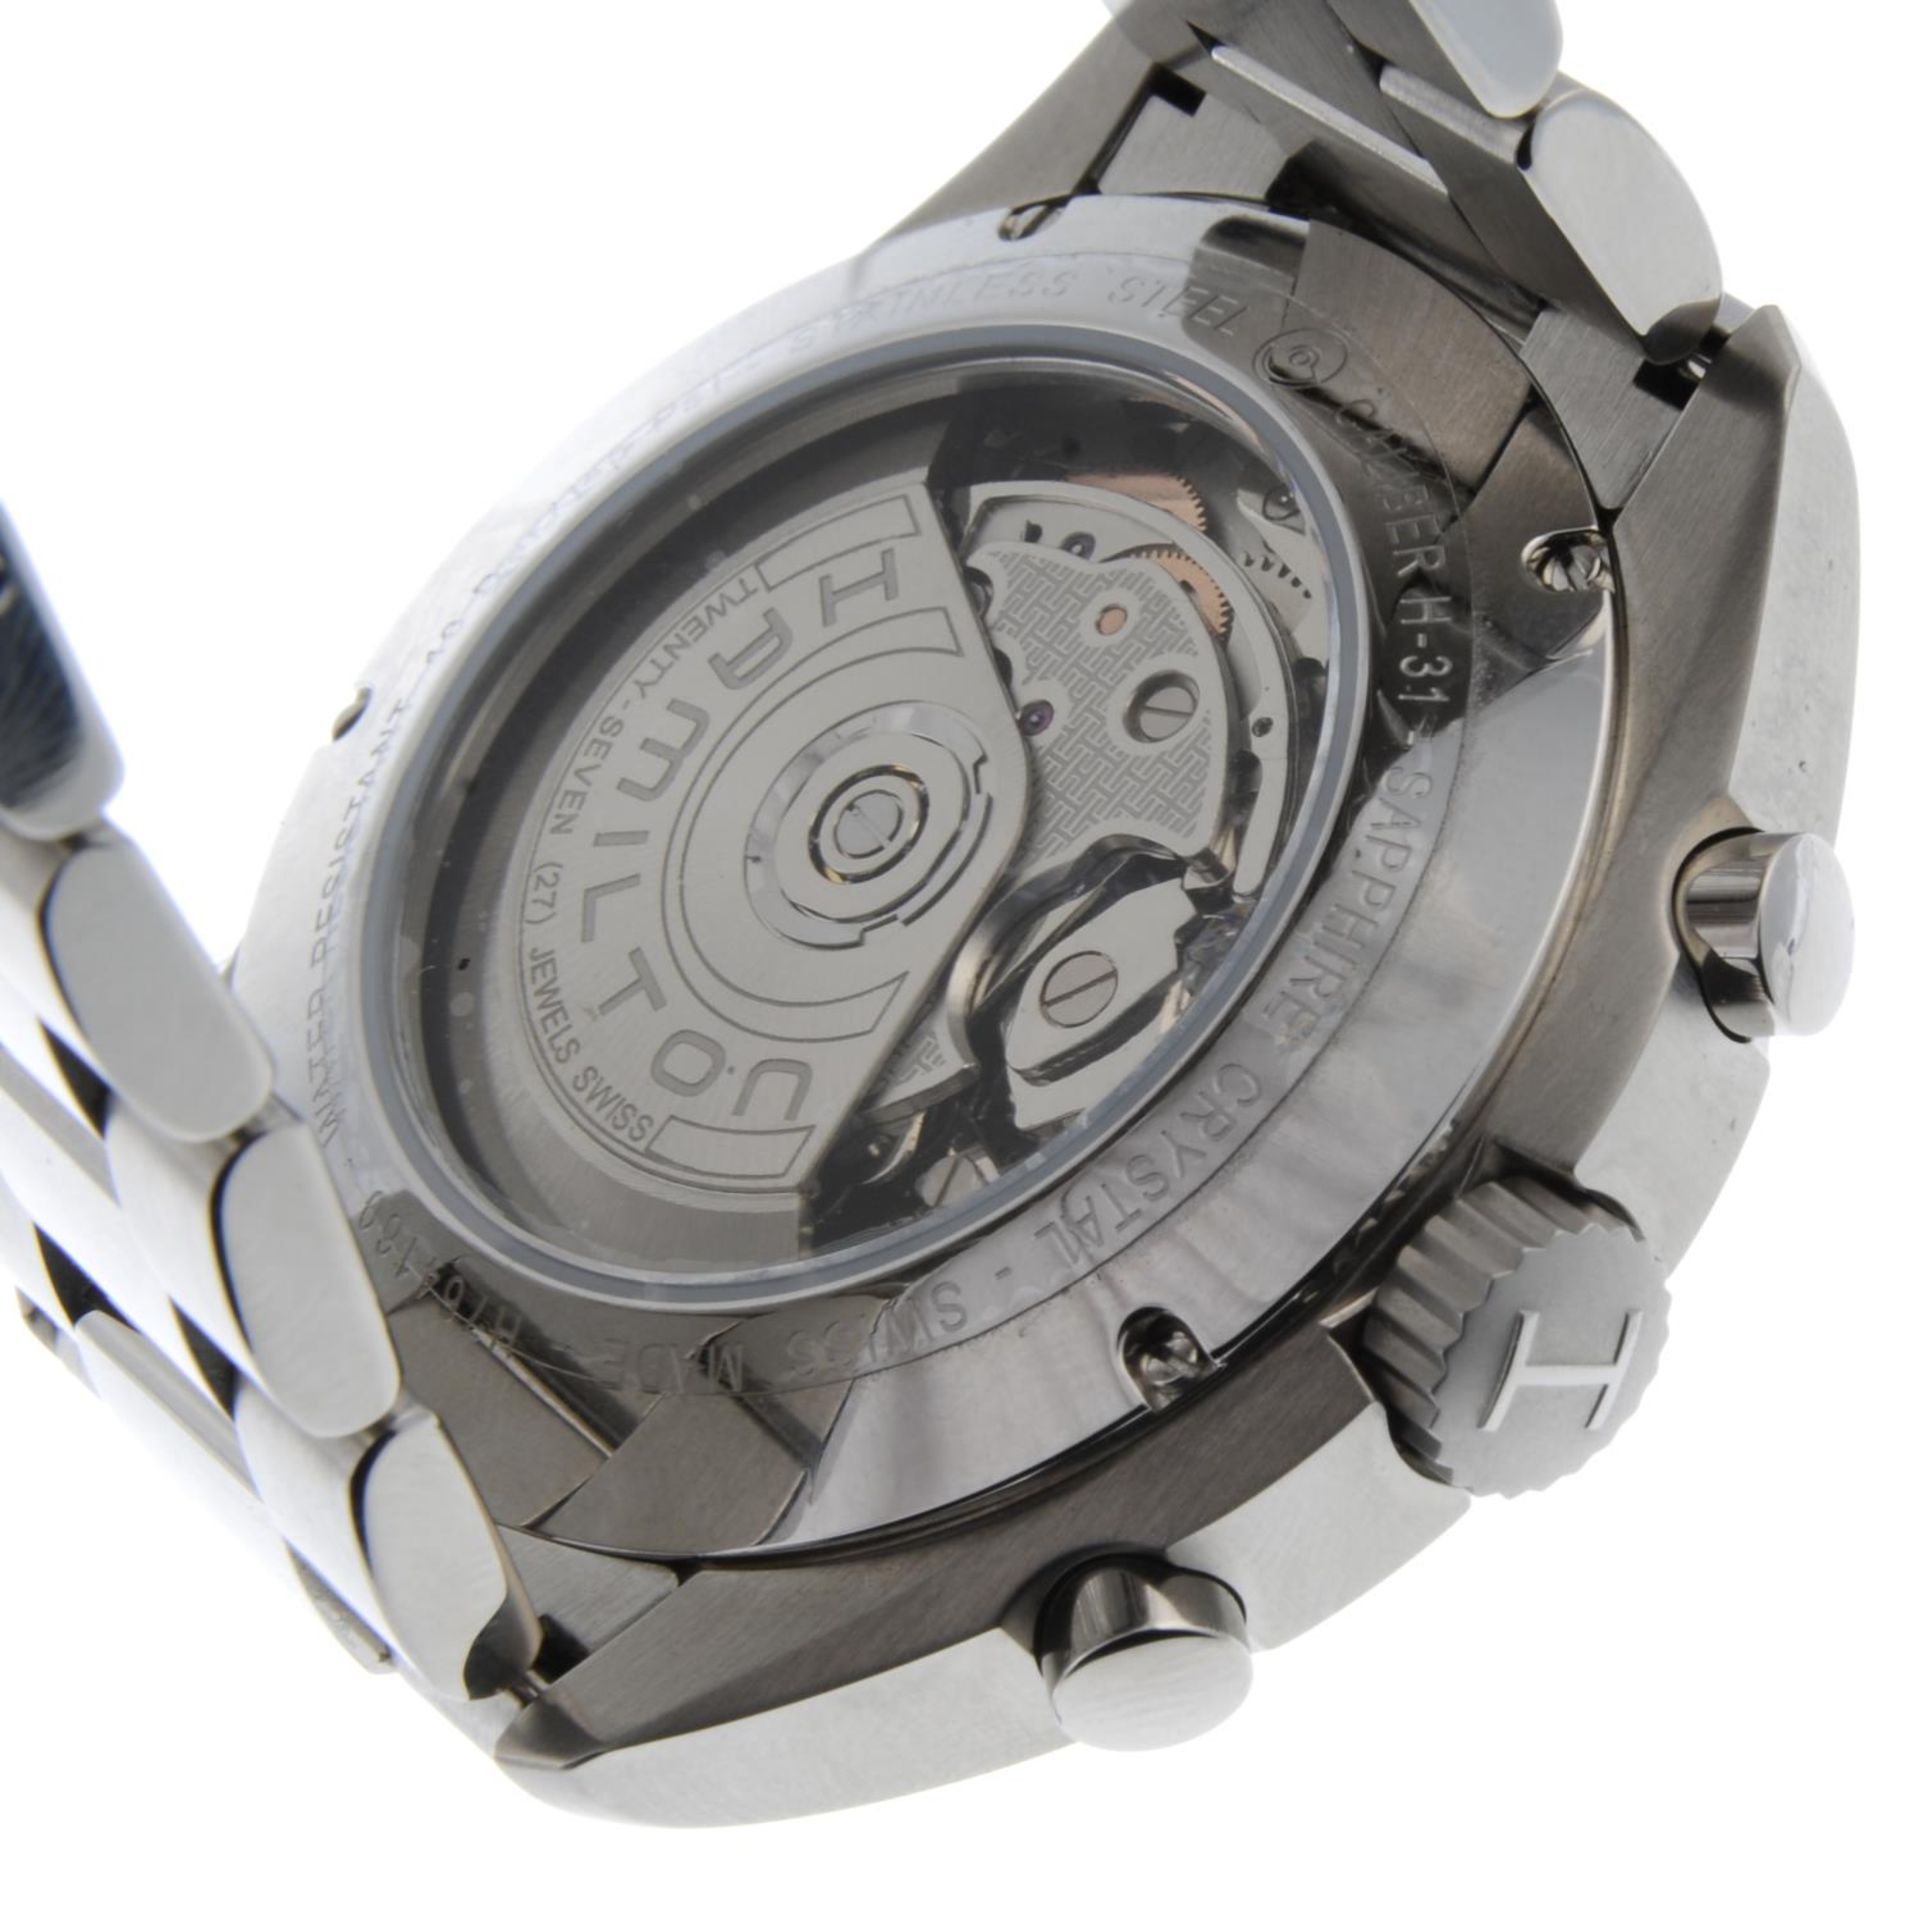 HAMILTON - a gentleman's Khaki Aviation Pilot Pioneer chronograph bracelet watch. - Image 2 of 4